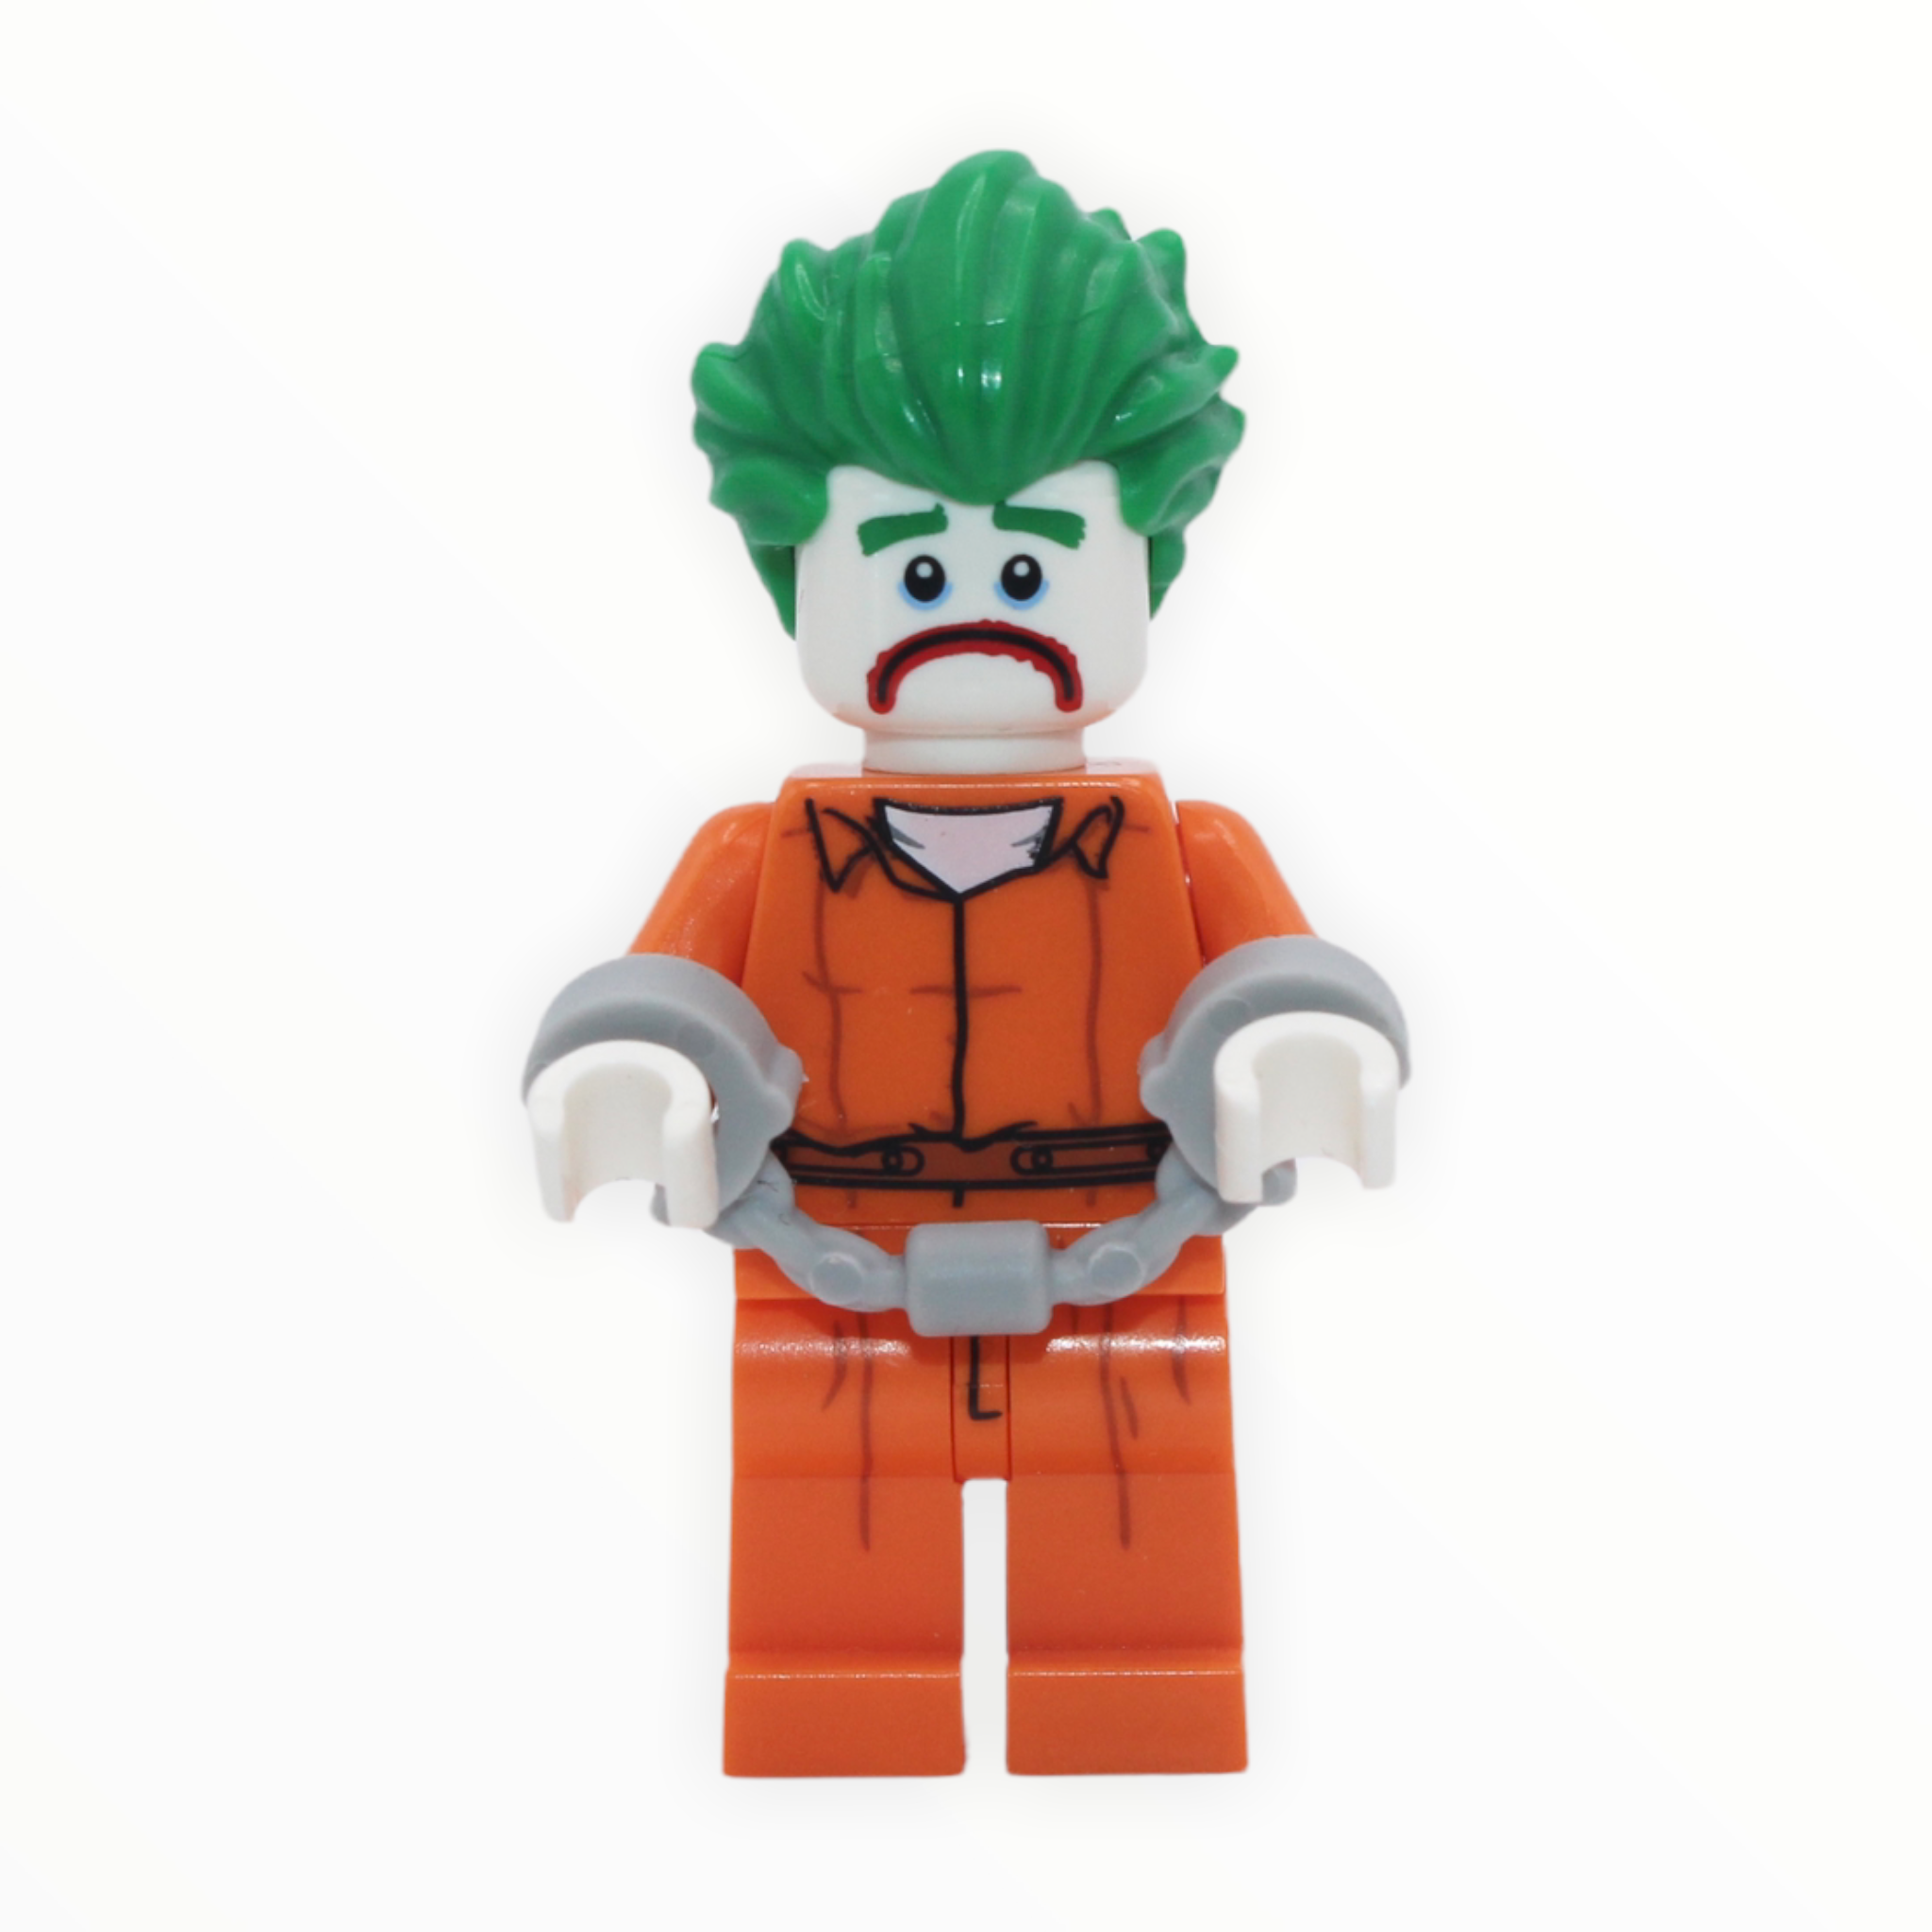 The LEGO Batman Movie Series 1: The Joker (Arkham Asylum)